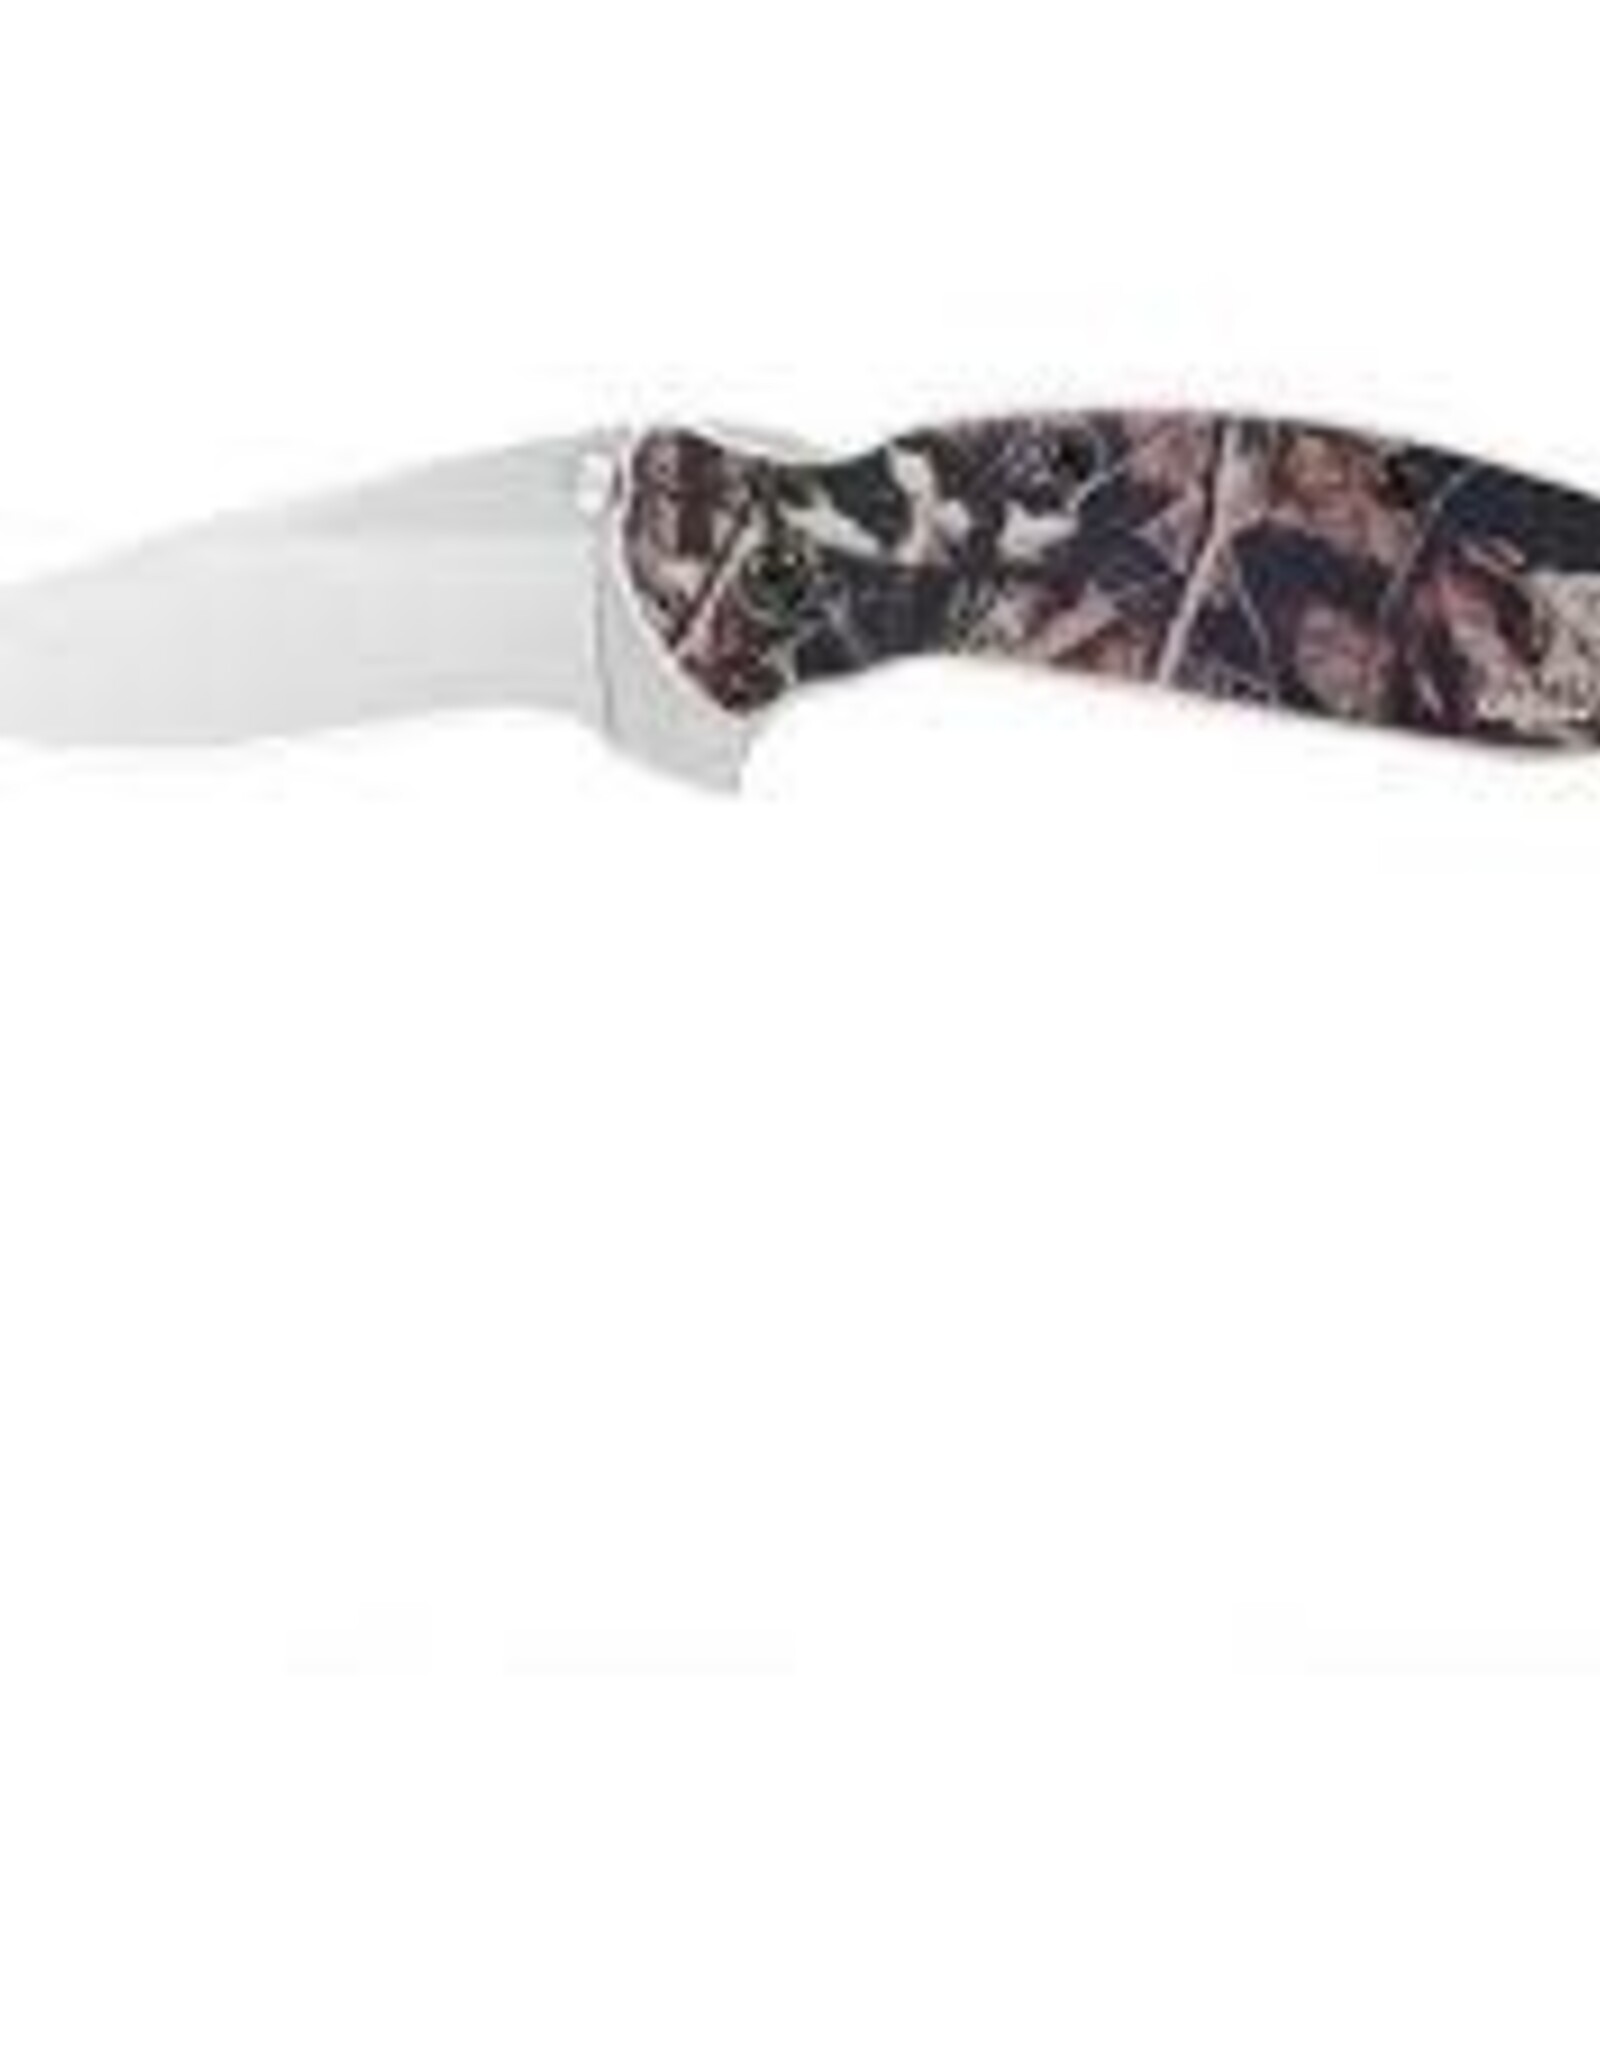 Kershaw Scallion Camo Knife